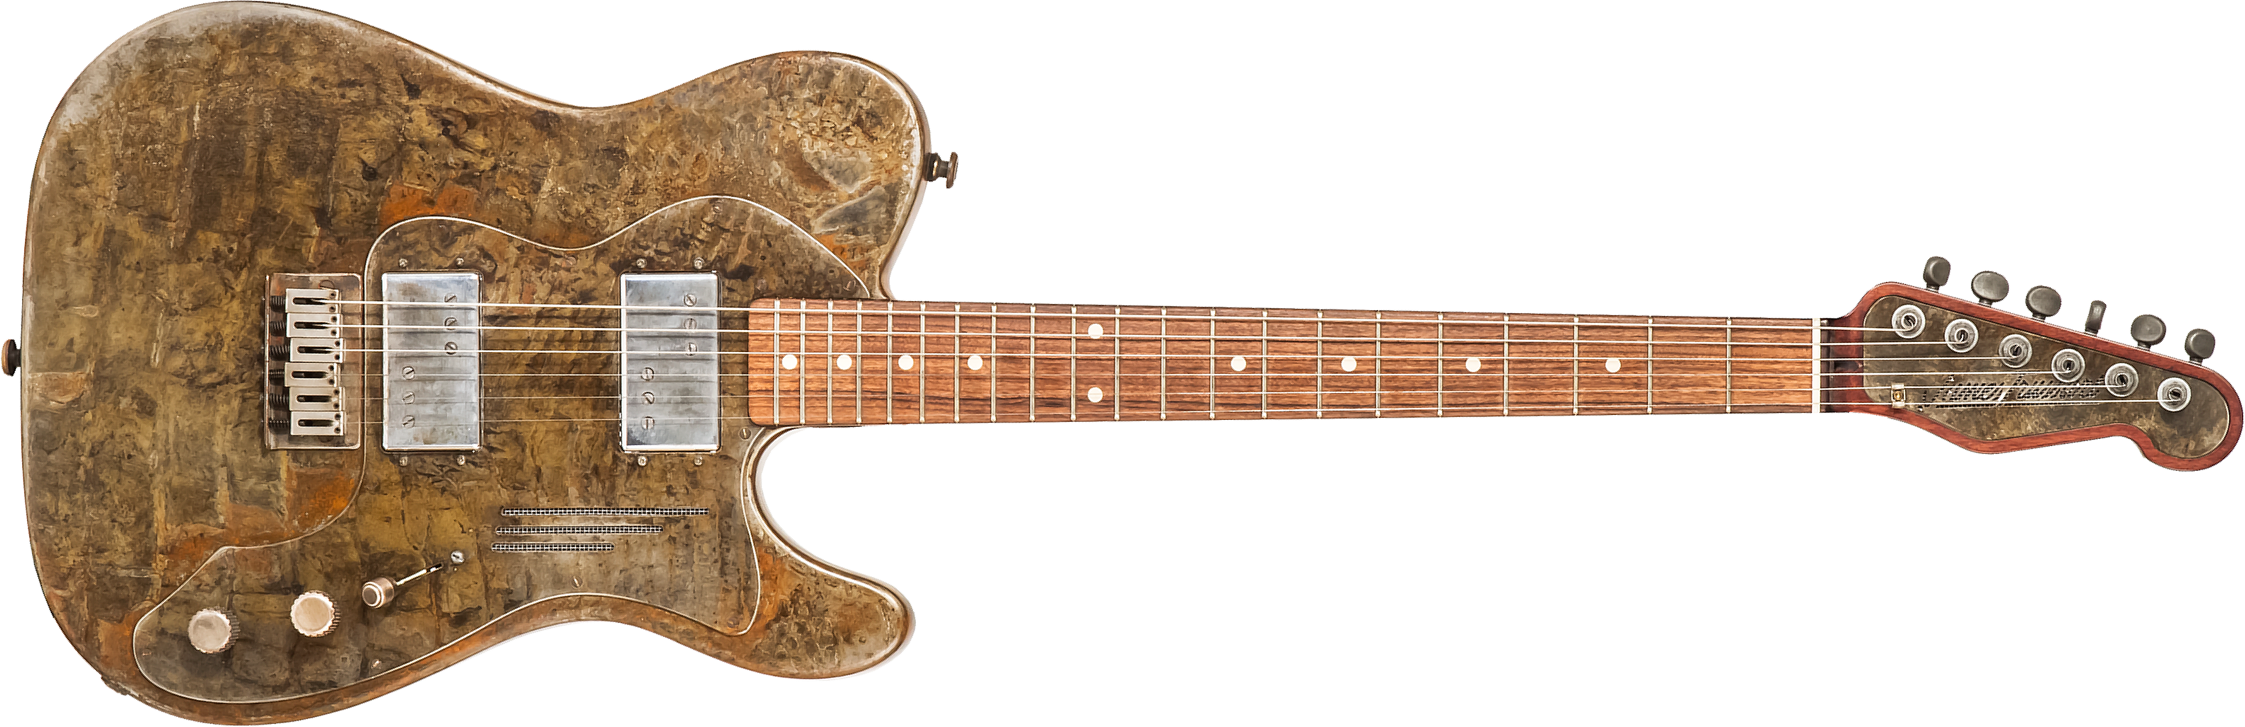 James Trussart Deluxe Steelguard Caster Perf. Back Wide Range 2h Rw Rusty #17148 - Rust O Matic - Semi hollow elektriche gitaar - Main picture